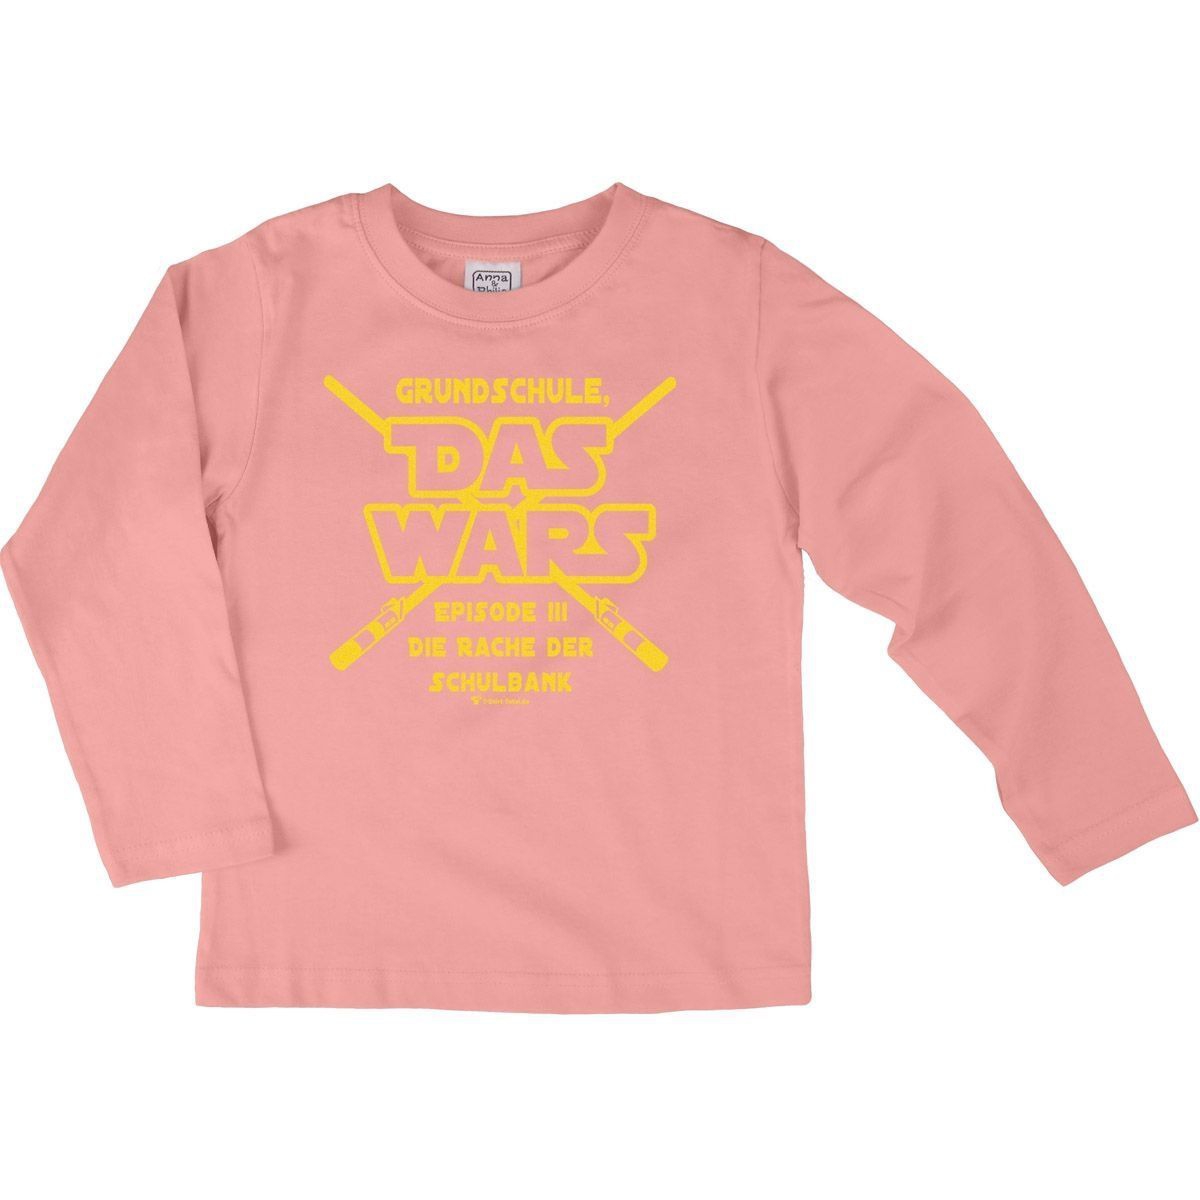 Das wars Grundschule Kinder Langarm Shirt rosa 134 / 140